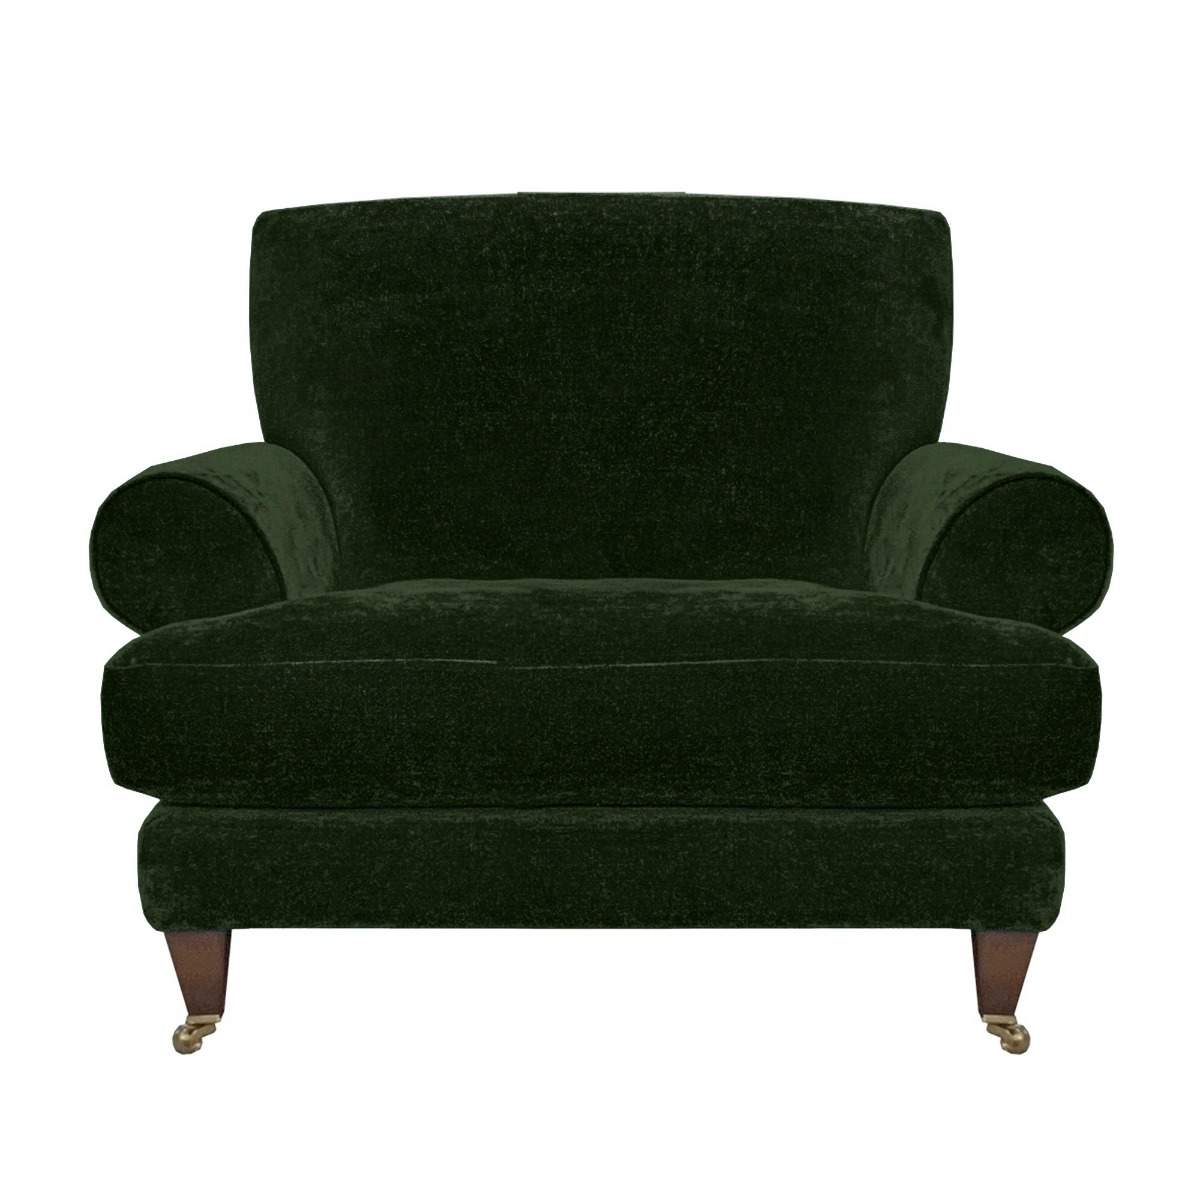 Fairlawn Standard Armchair, Green Fabric | Barker & Stonehouse